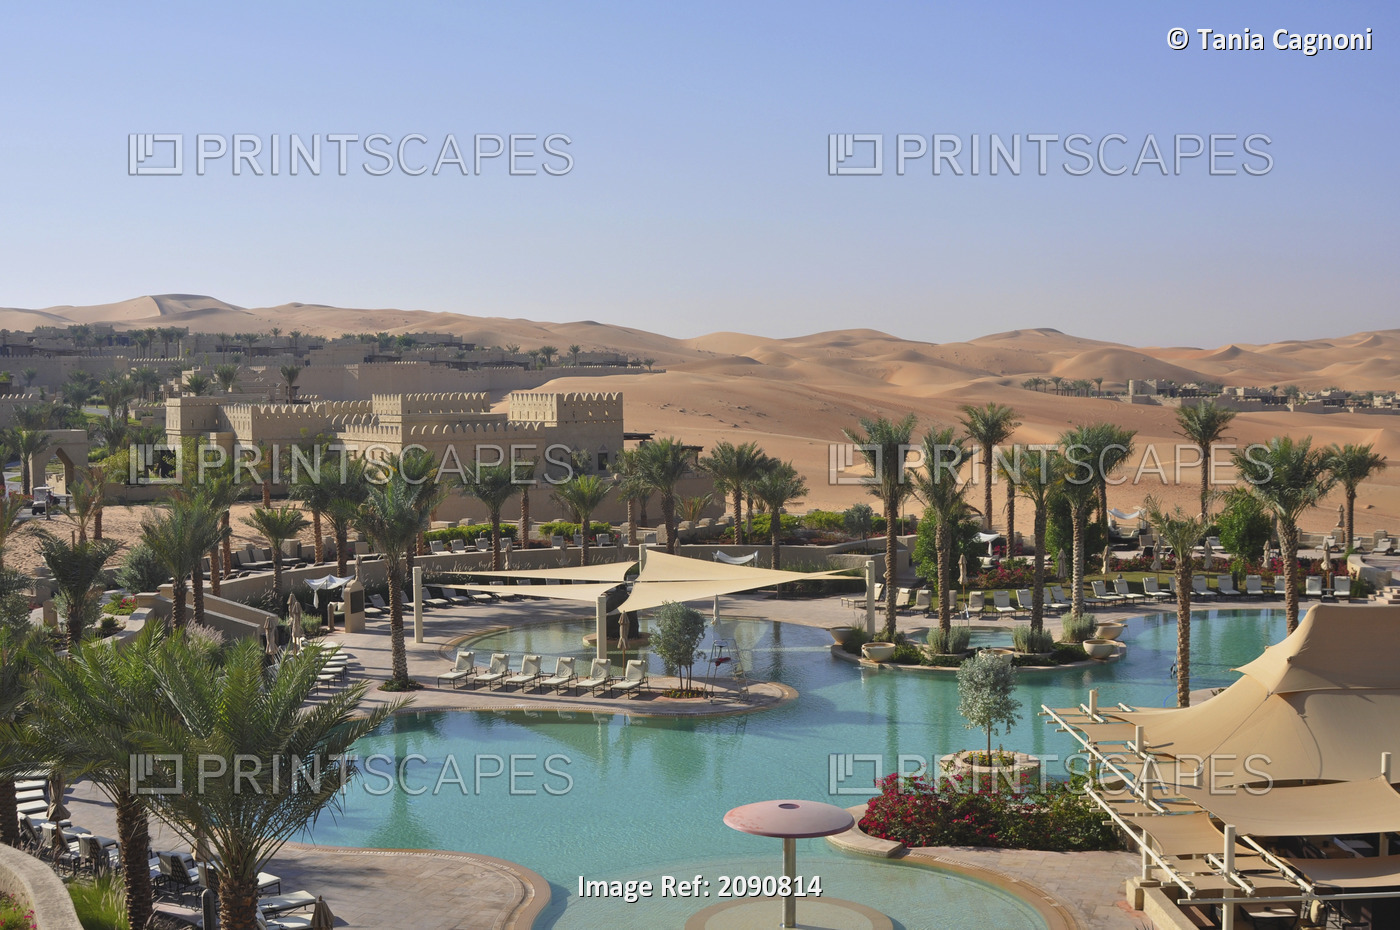 Main Pool And Dunes, Qasr Al Sarab, Abu Dhabi